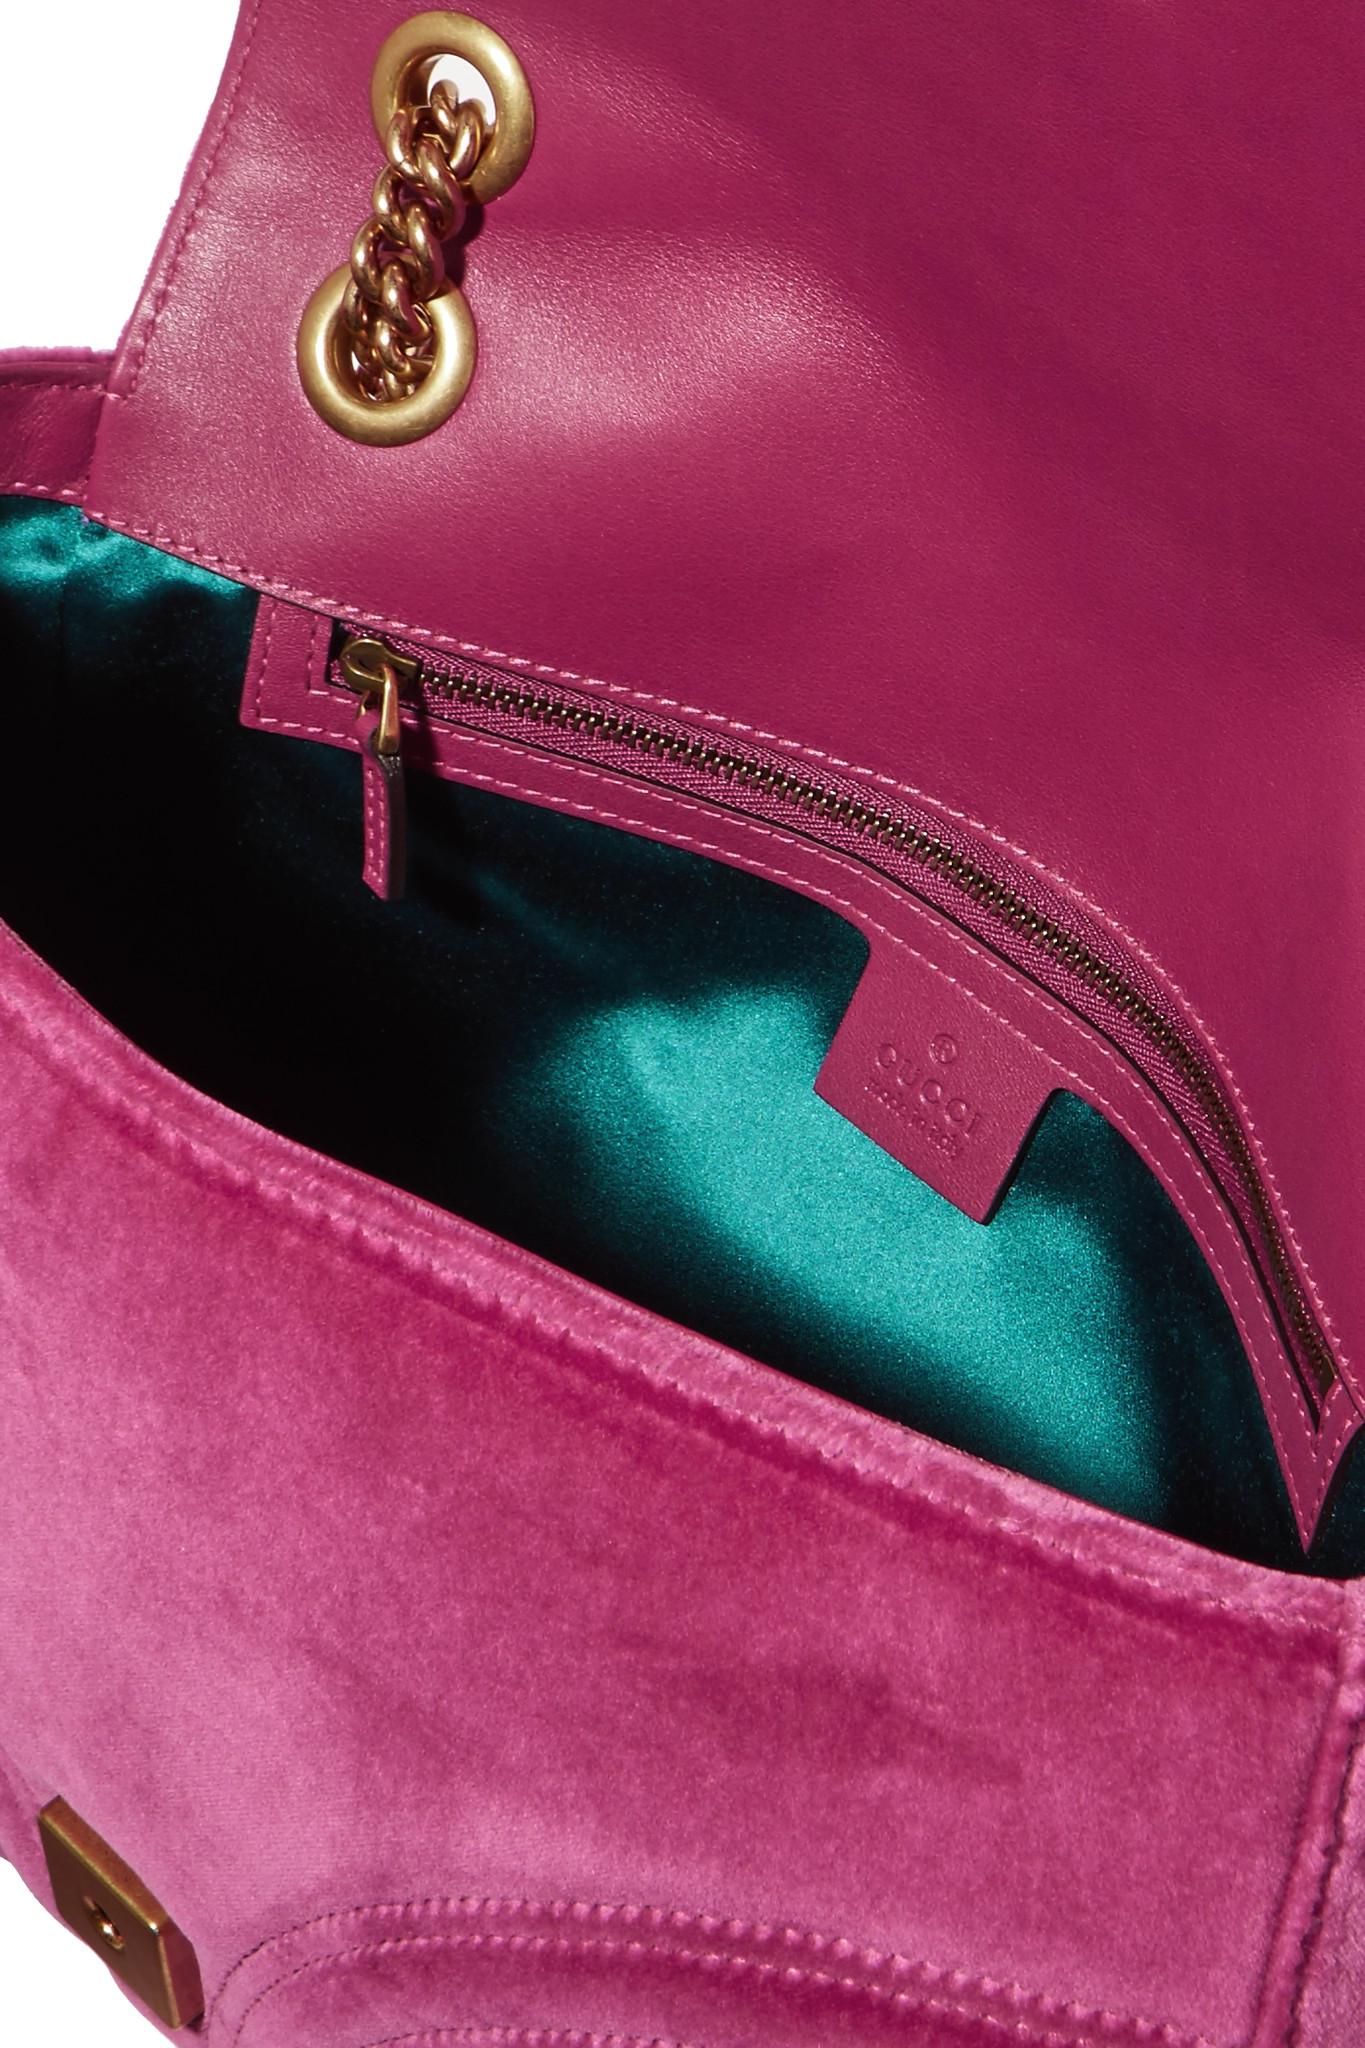 Gucci Gg Marmont Medium Embellished Quilted Velvet And Leather Shoulder Bag in Pink - Lyst